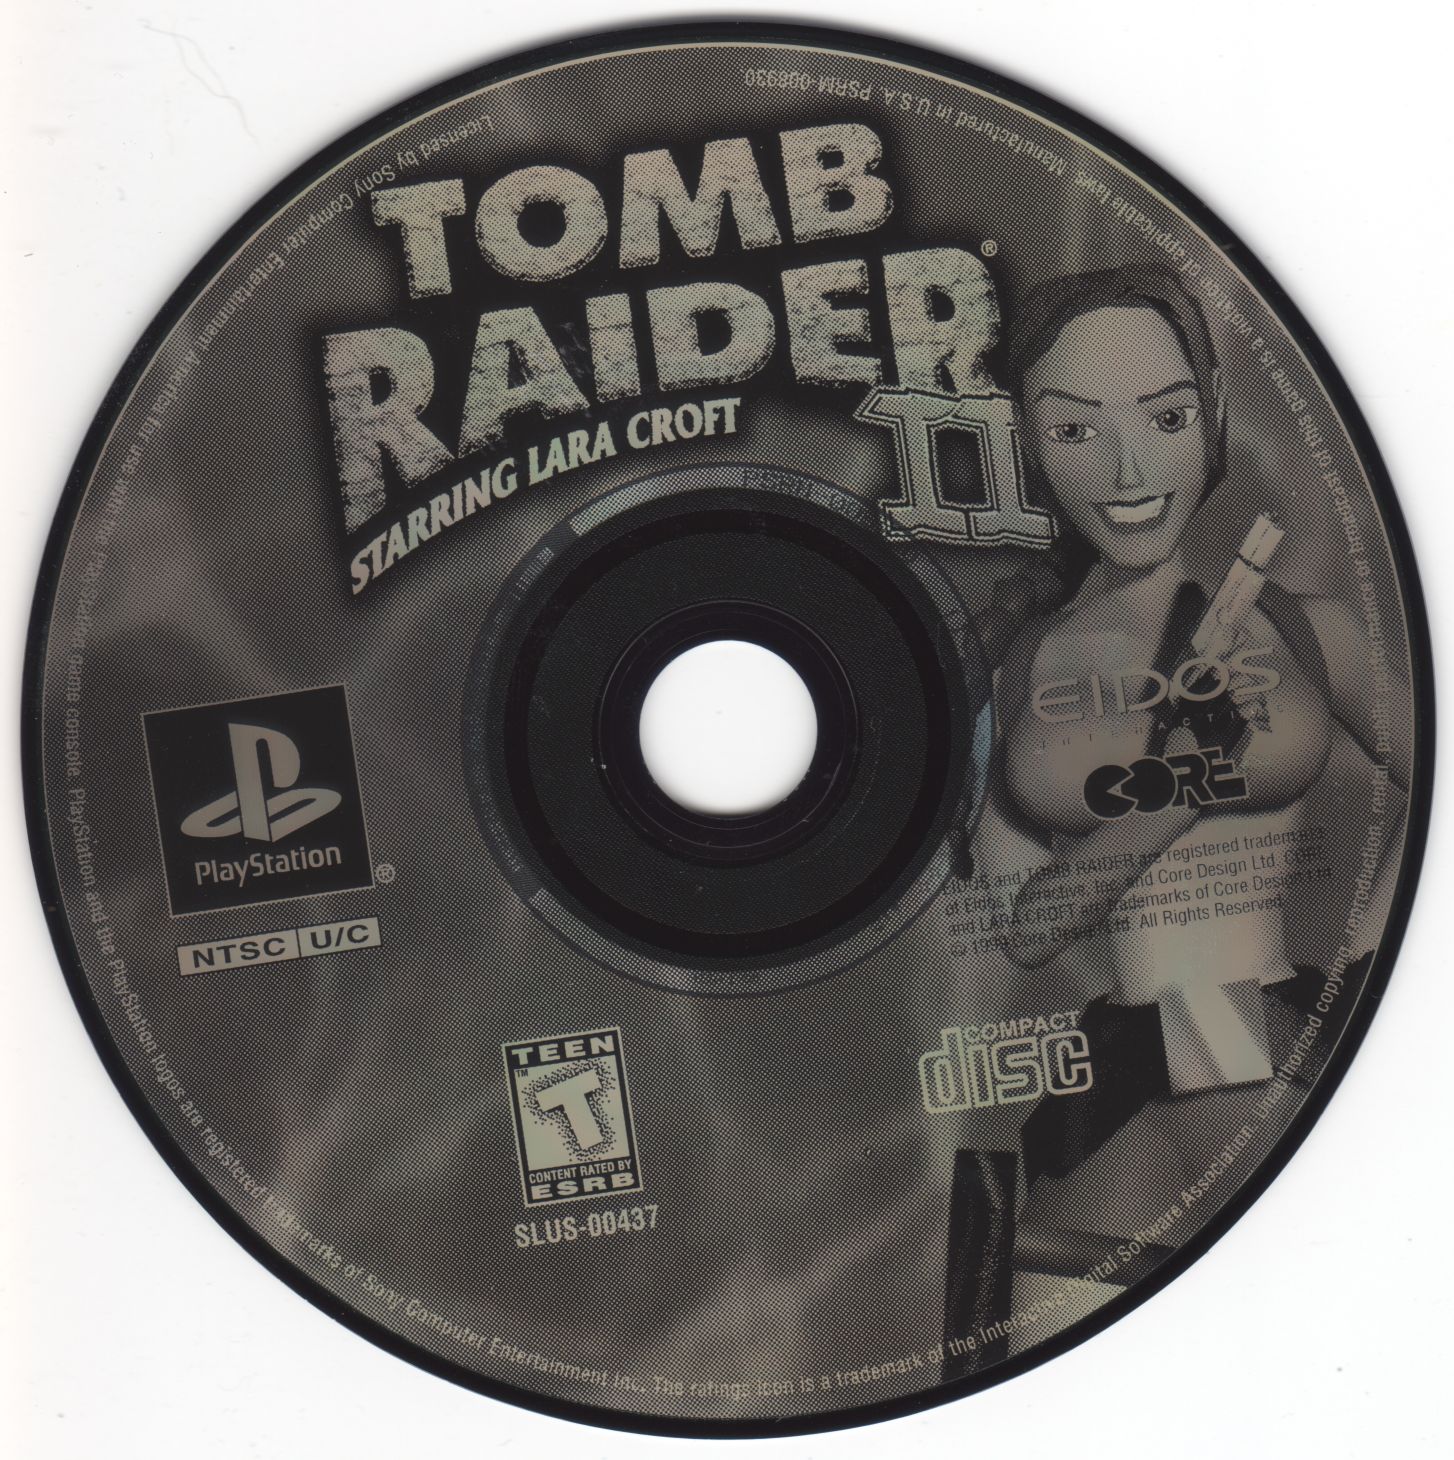 Tomb Raider II PSX cover